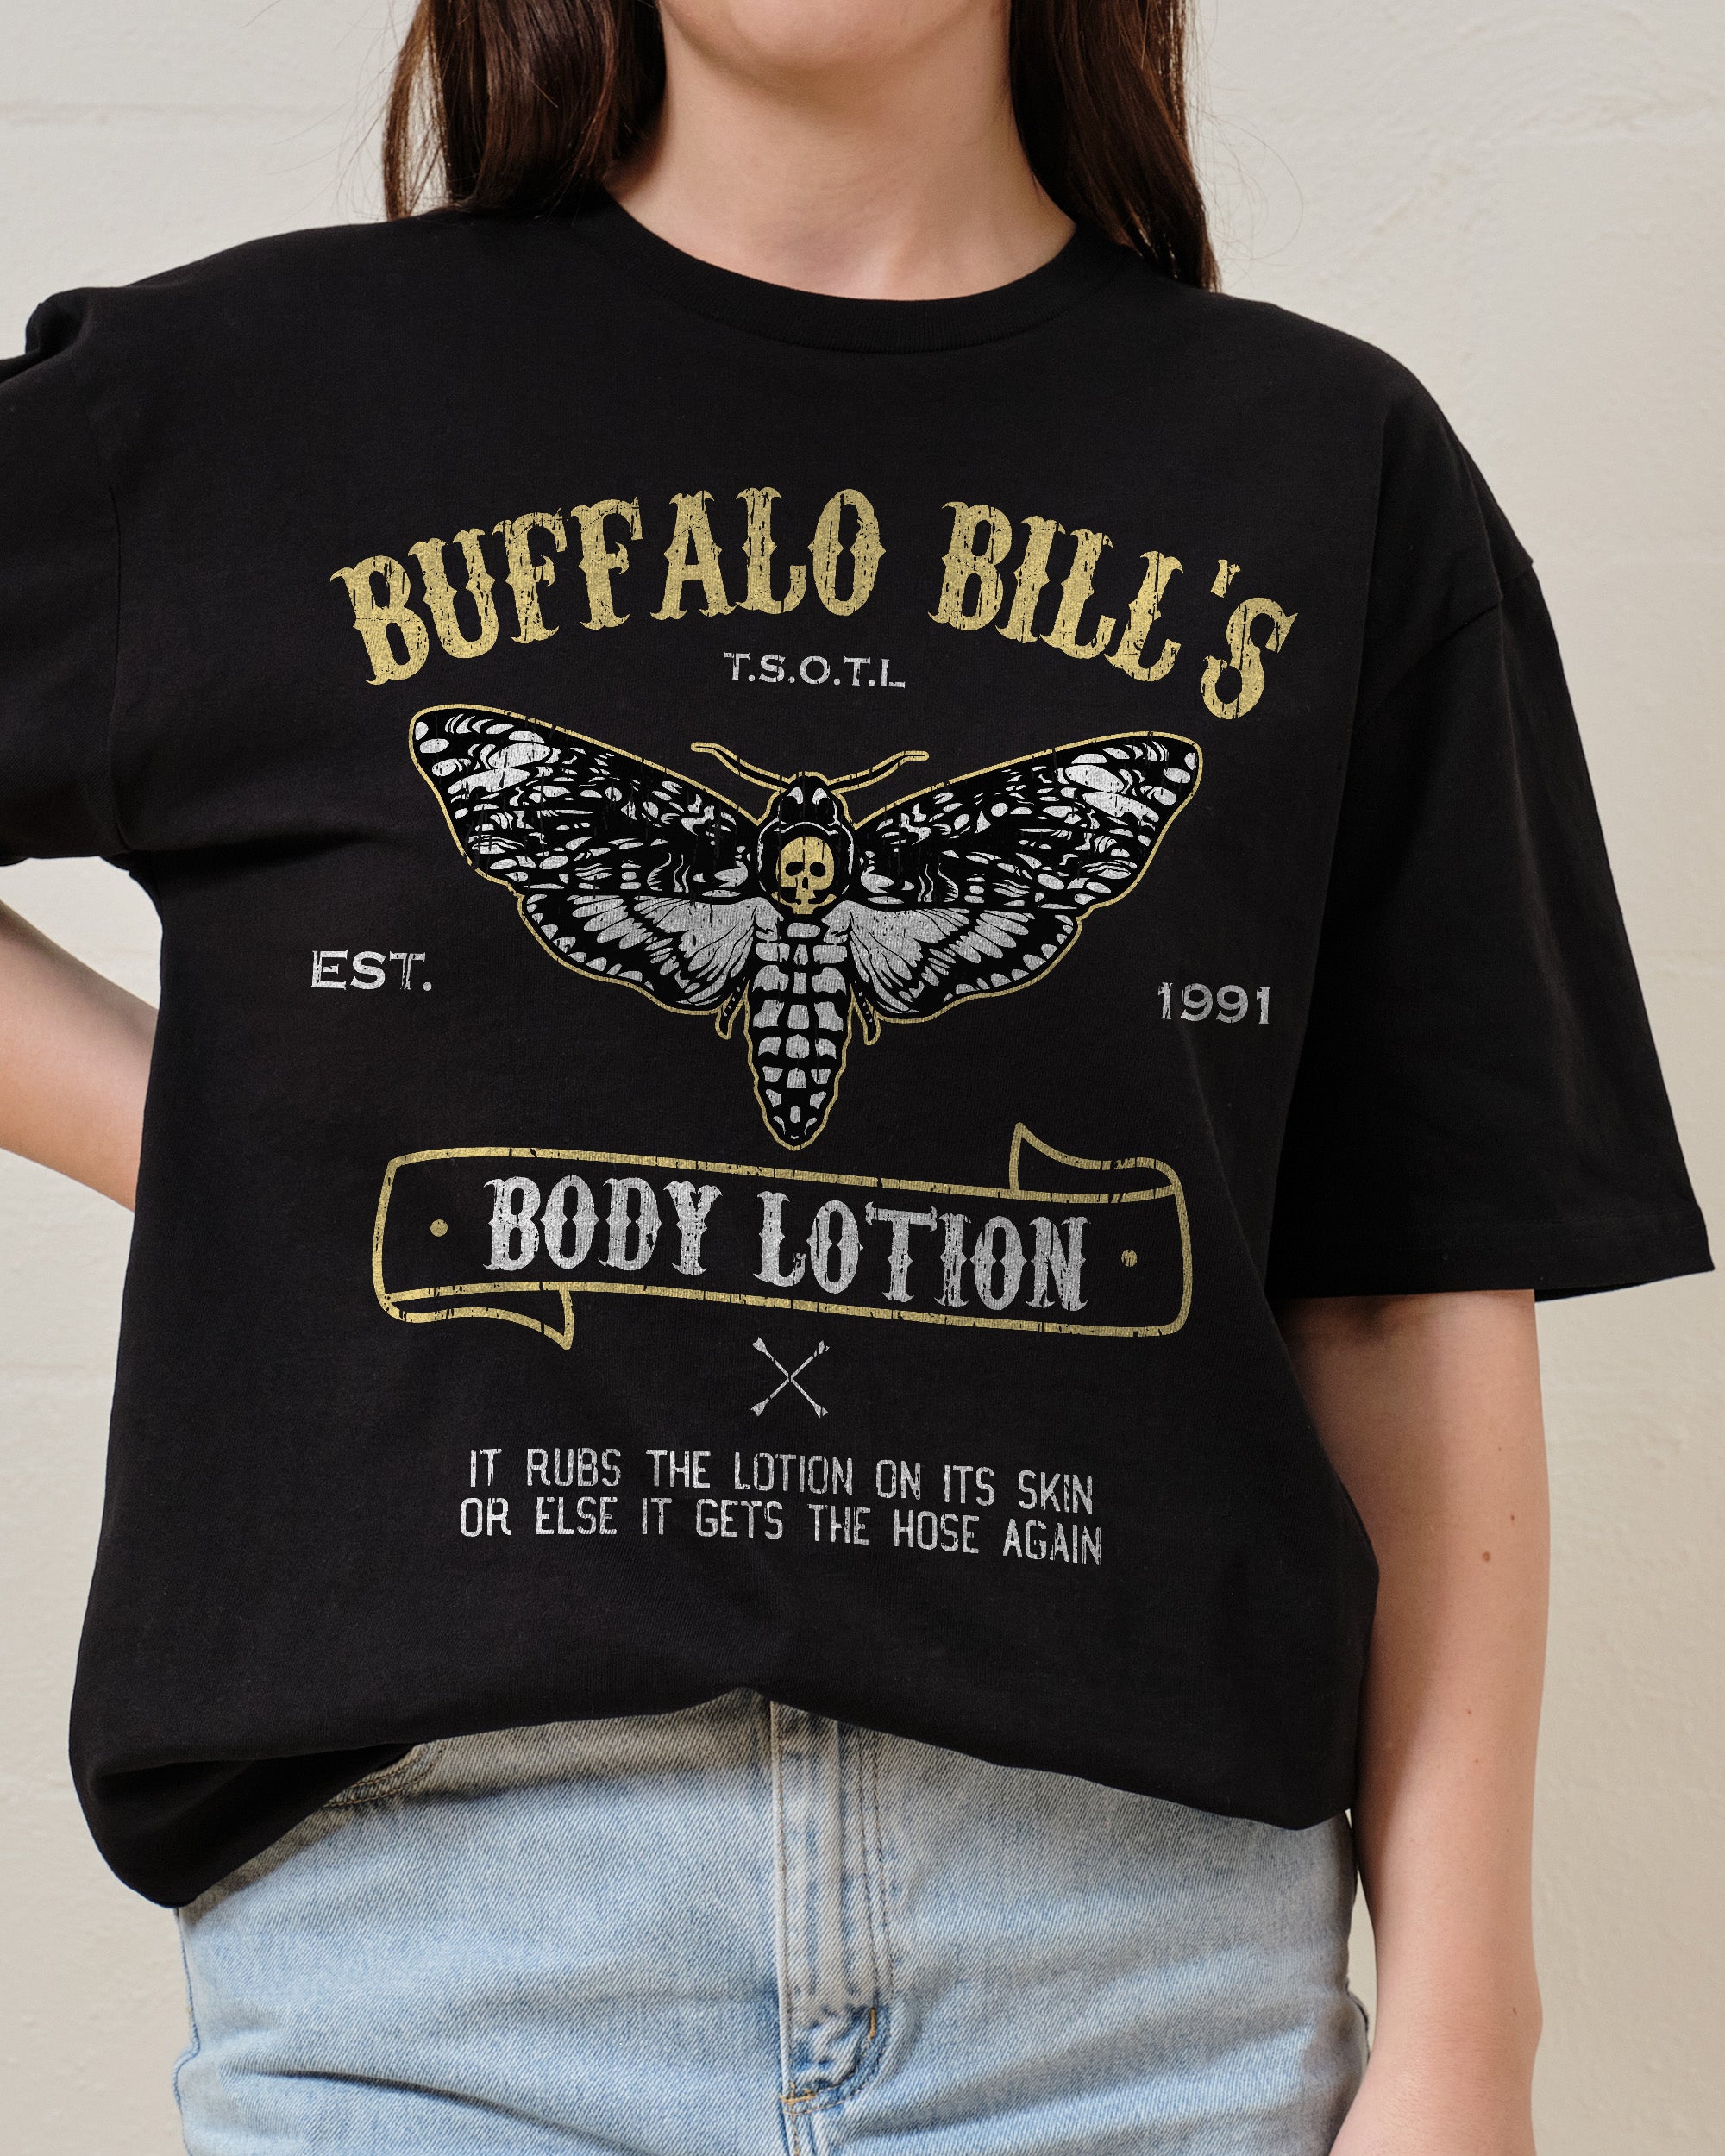 Buffalo Bill's Rubbing Lotion T-Shirt Australia Online